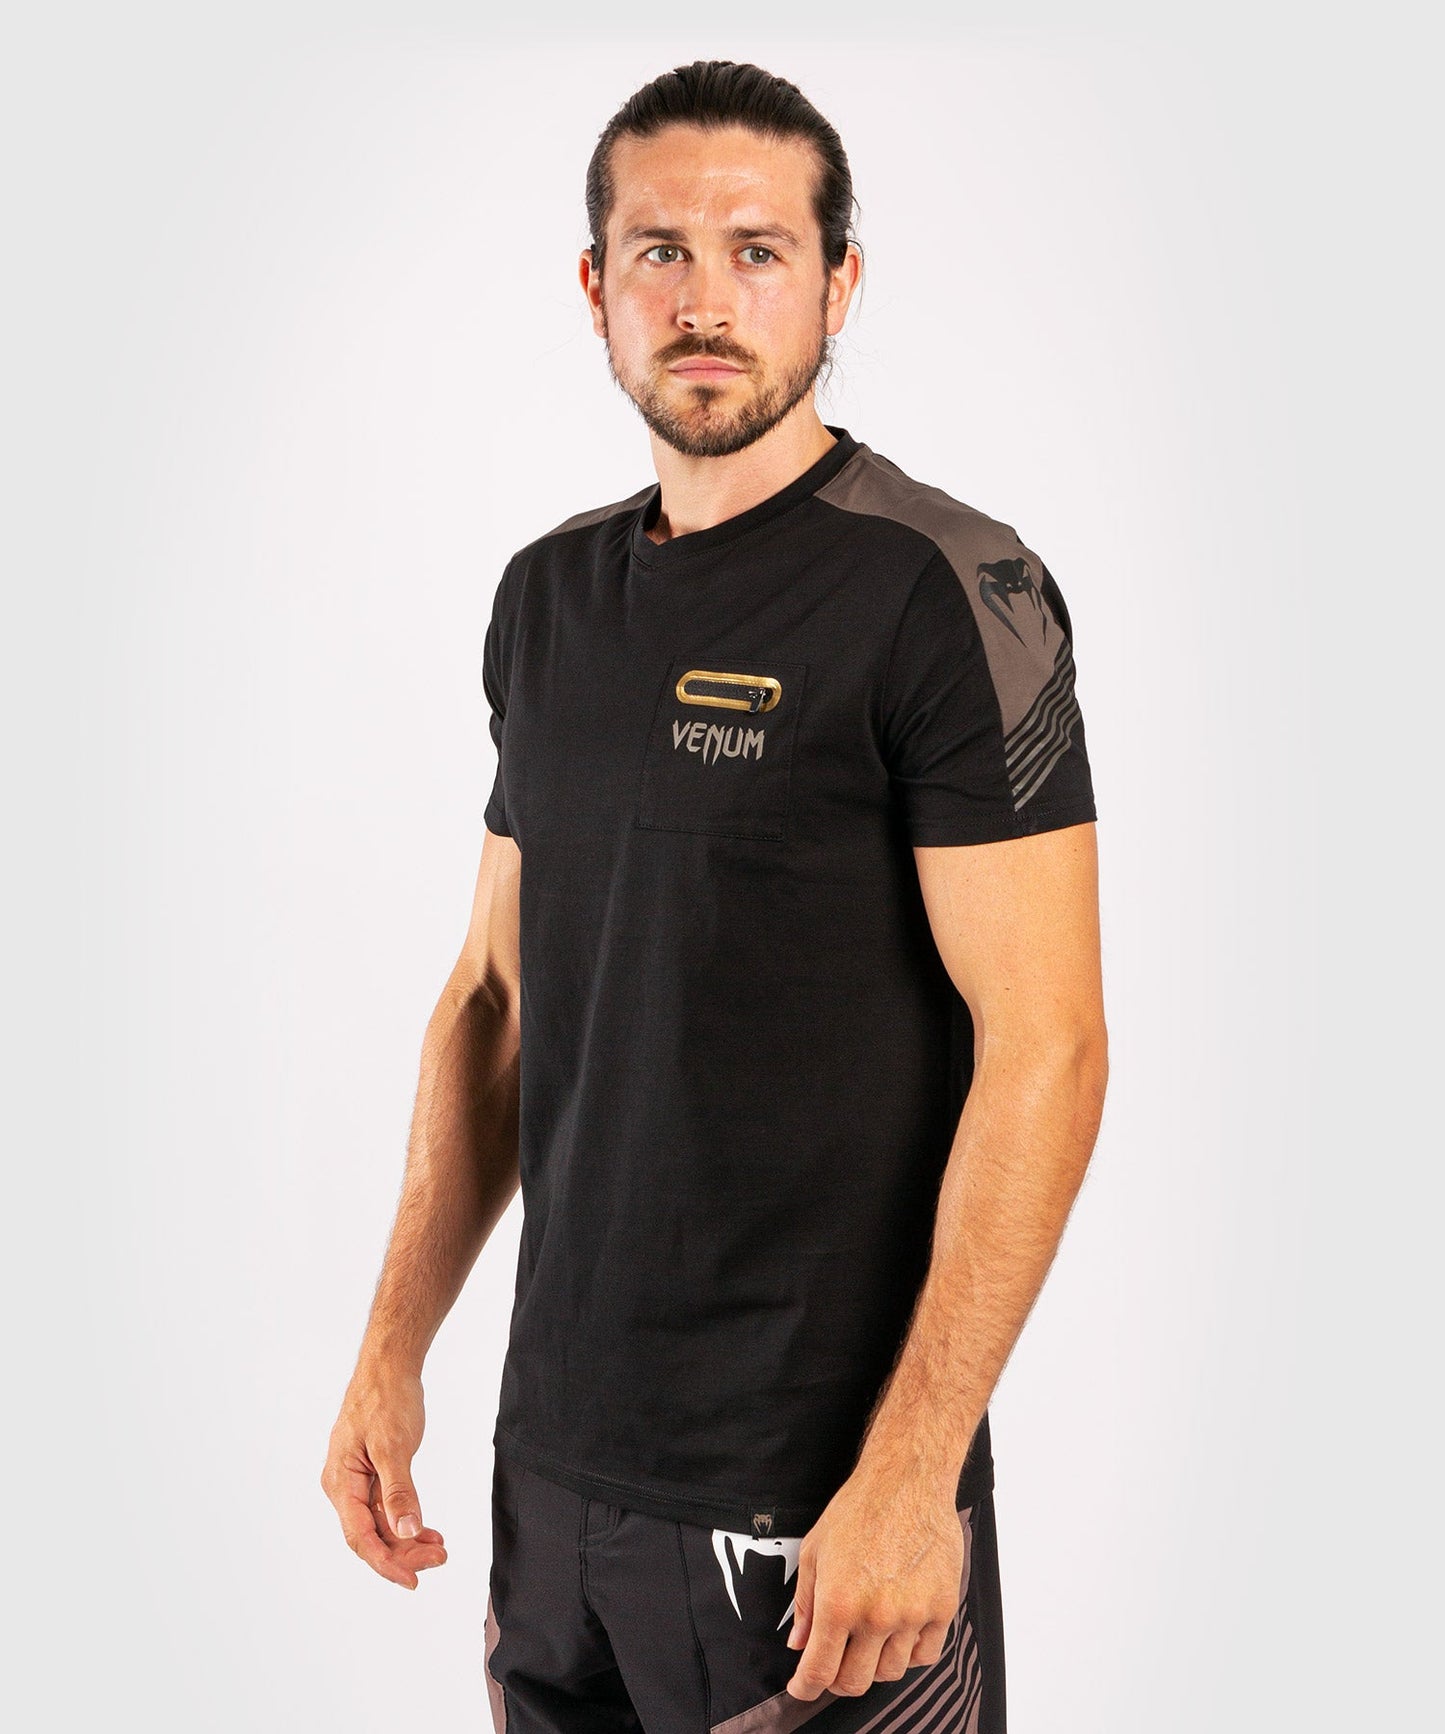 Venum Cargo T-shirt - Black/Grey